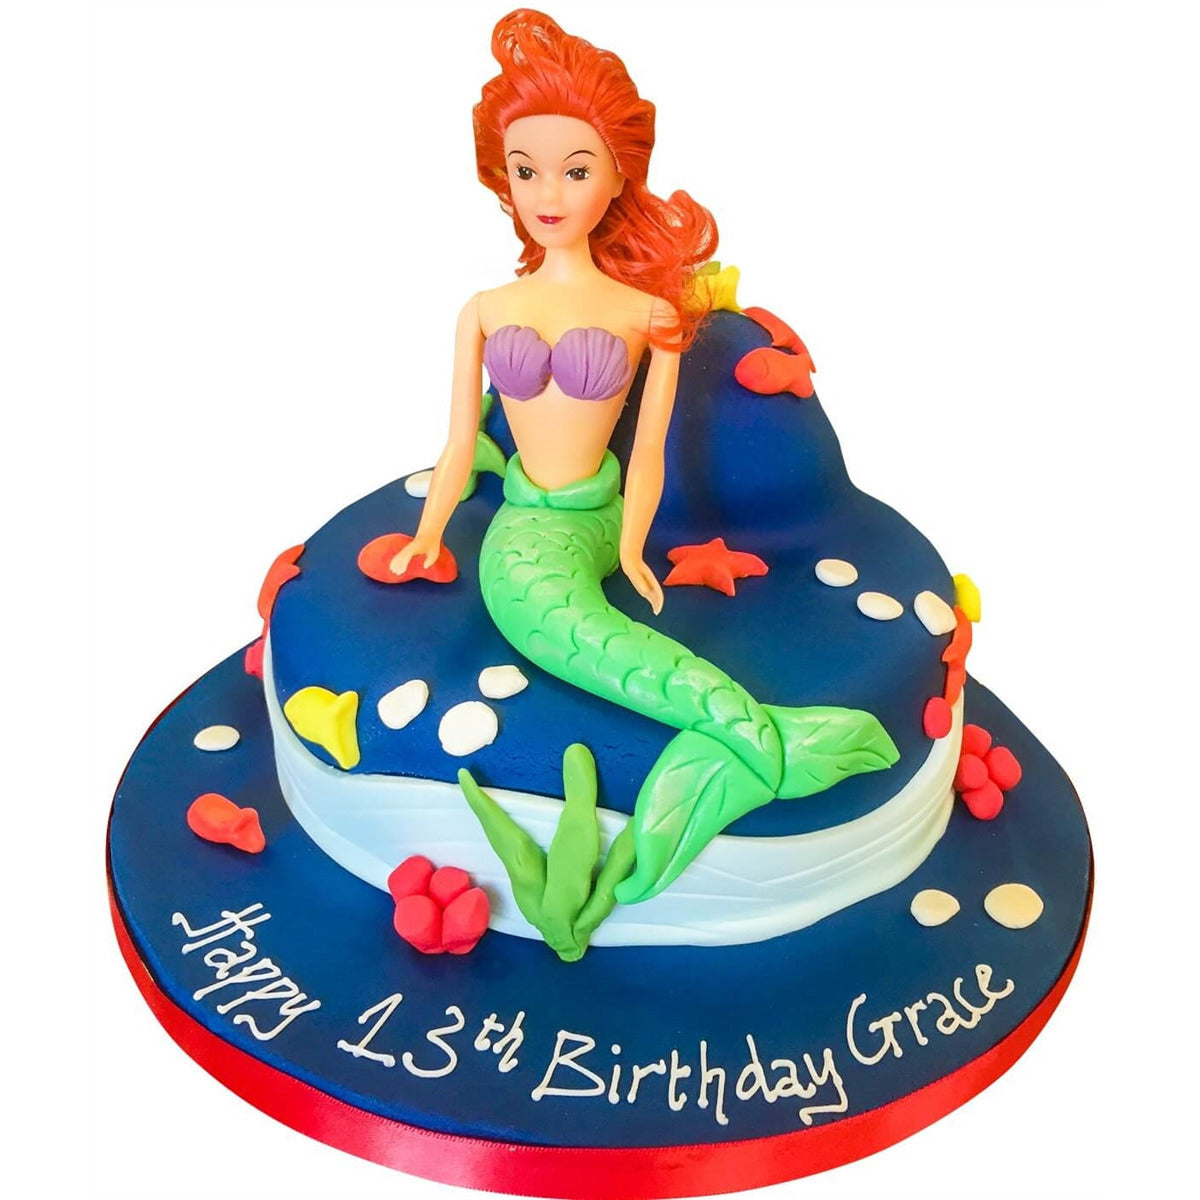 The Little Mermaid Cake | The Sugar Bakery